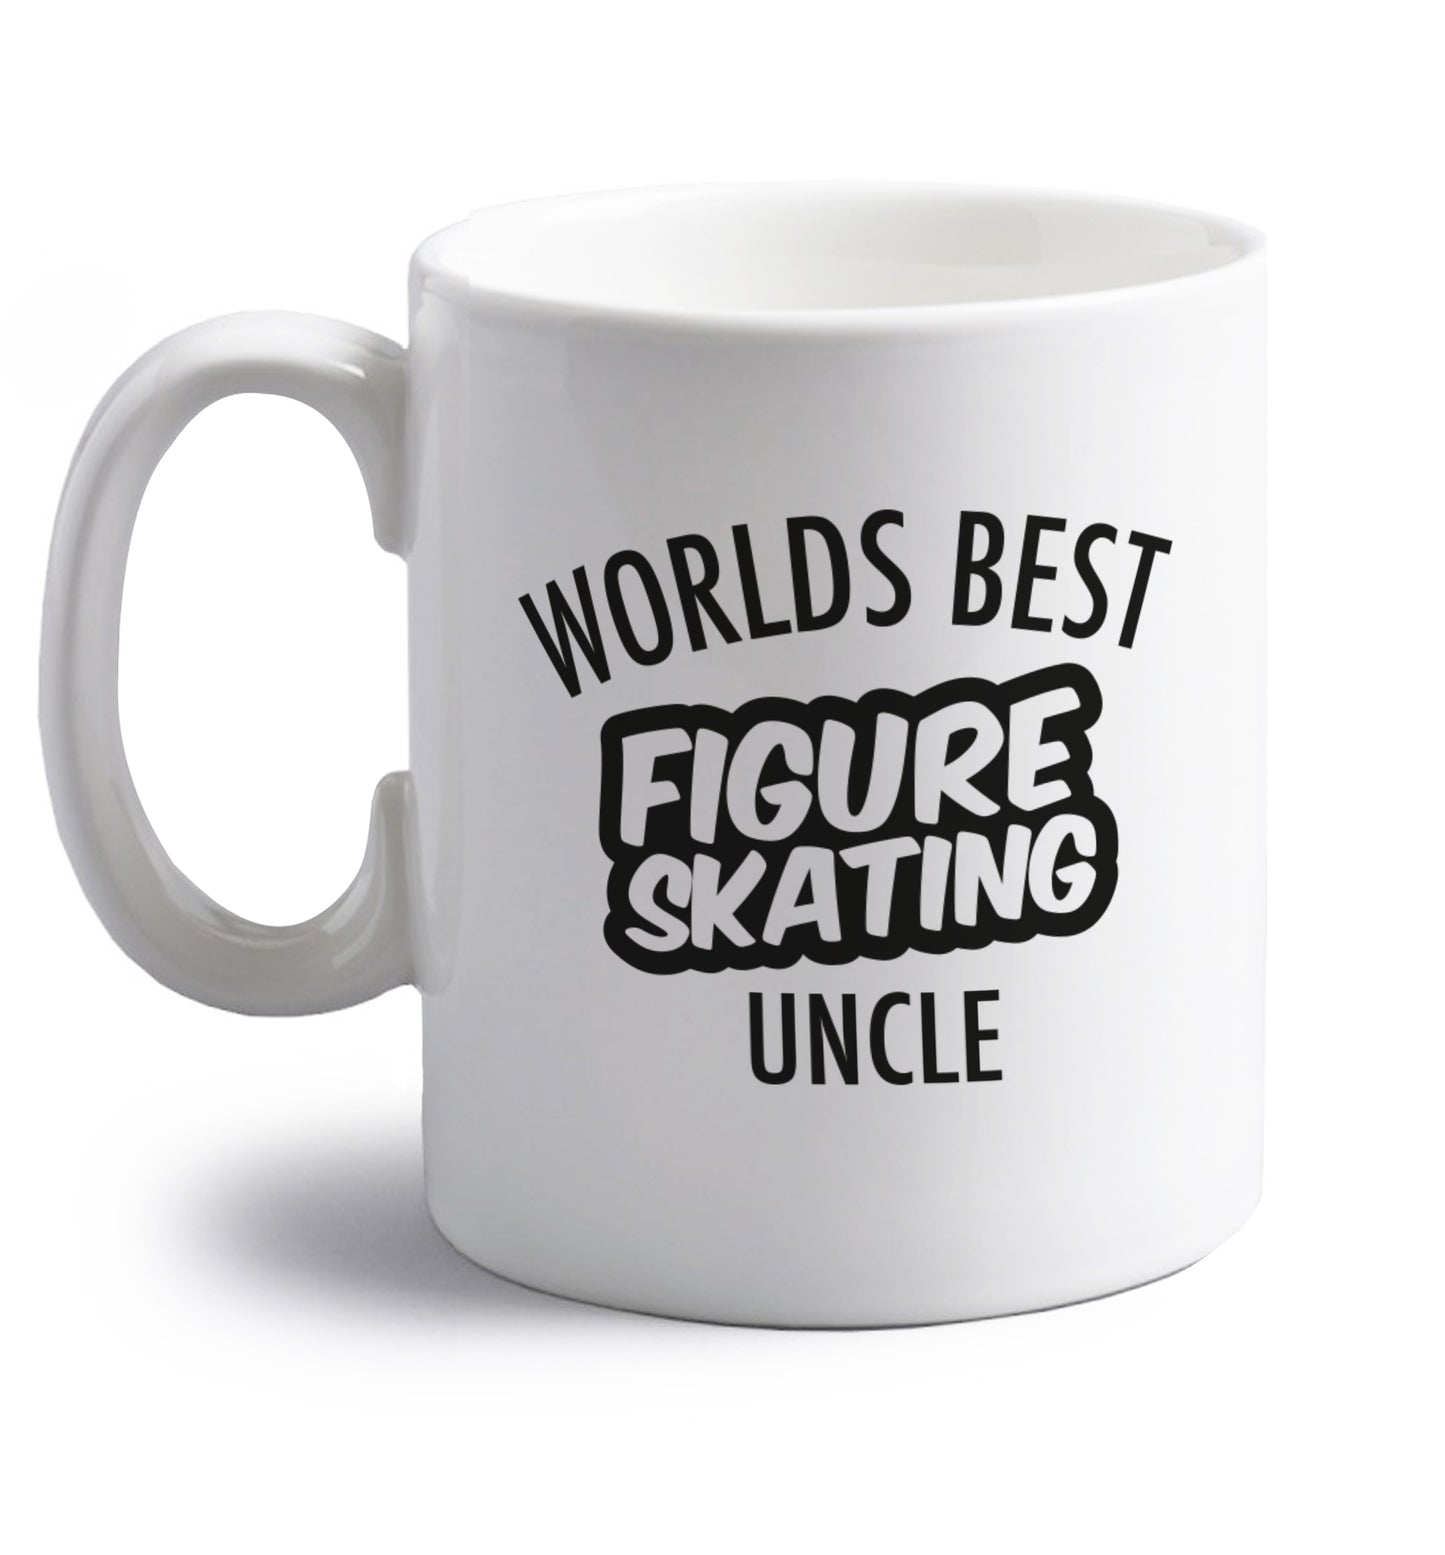 Worlds best figure skating uncle right handed white ceramic mug 